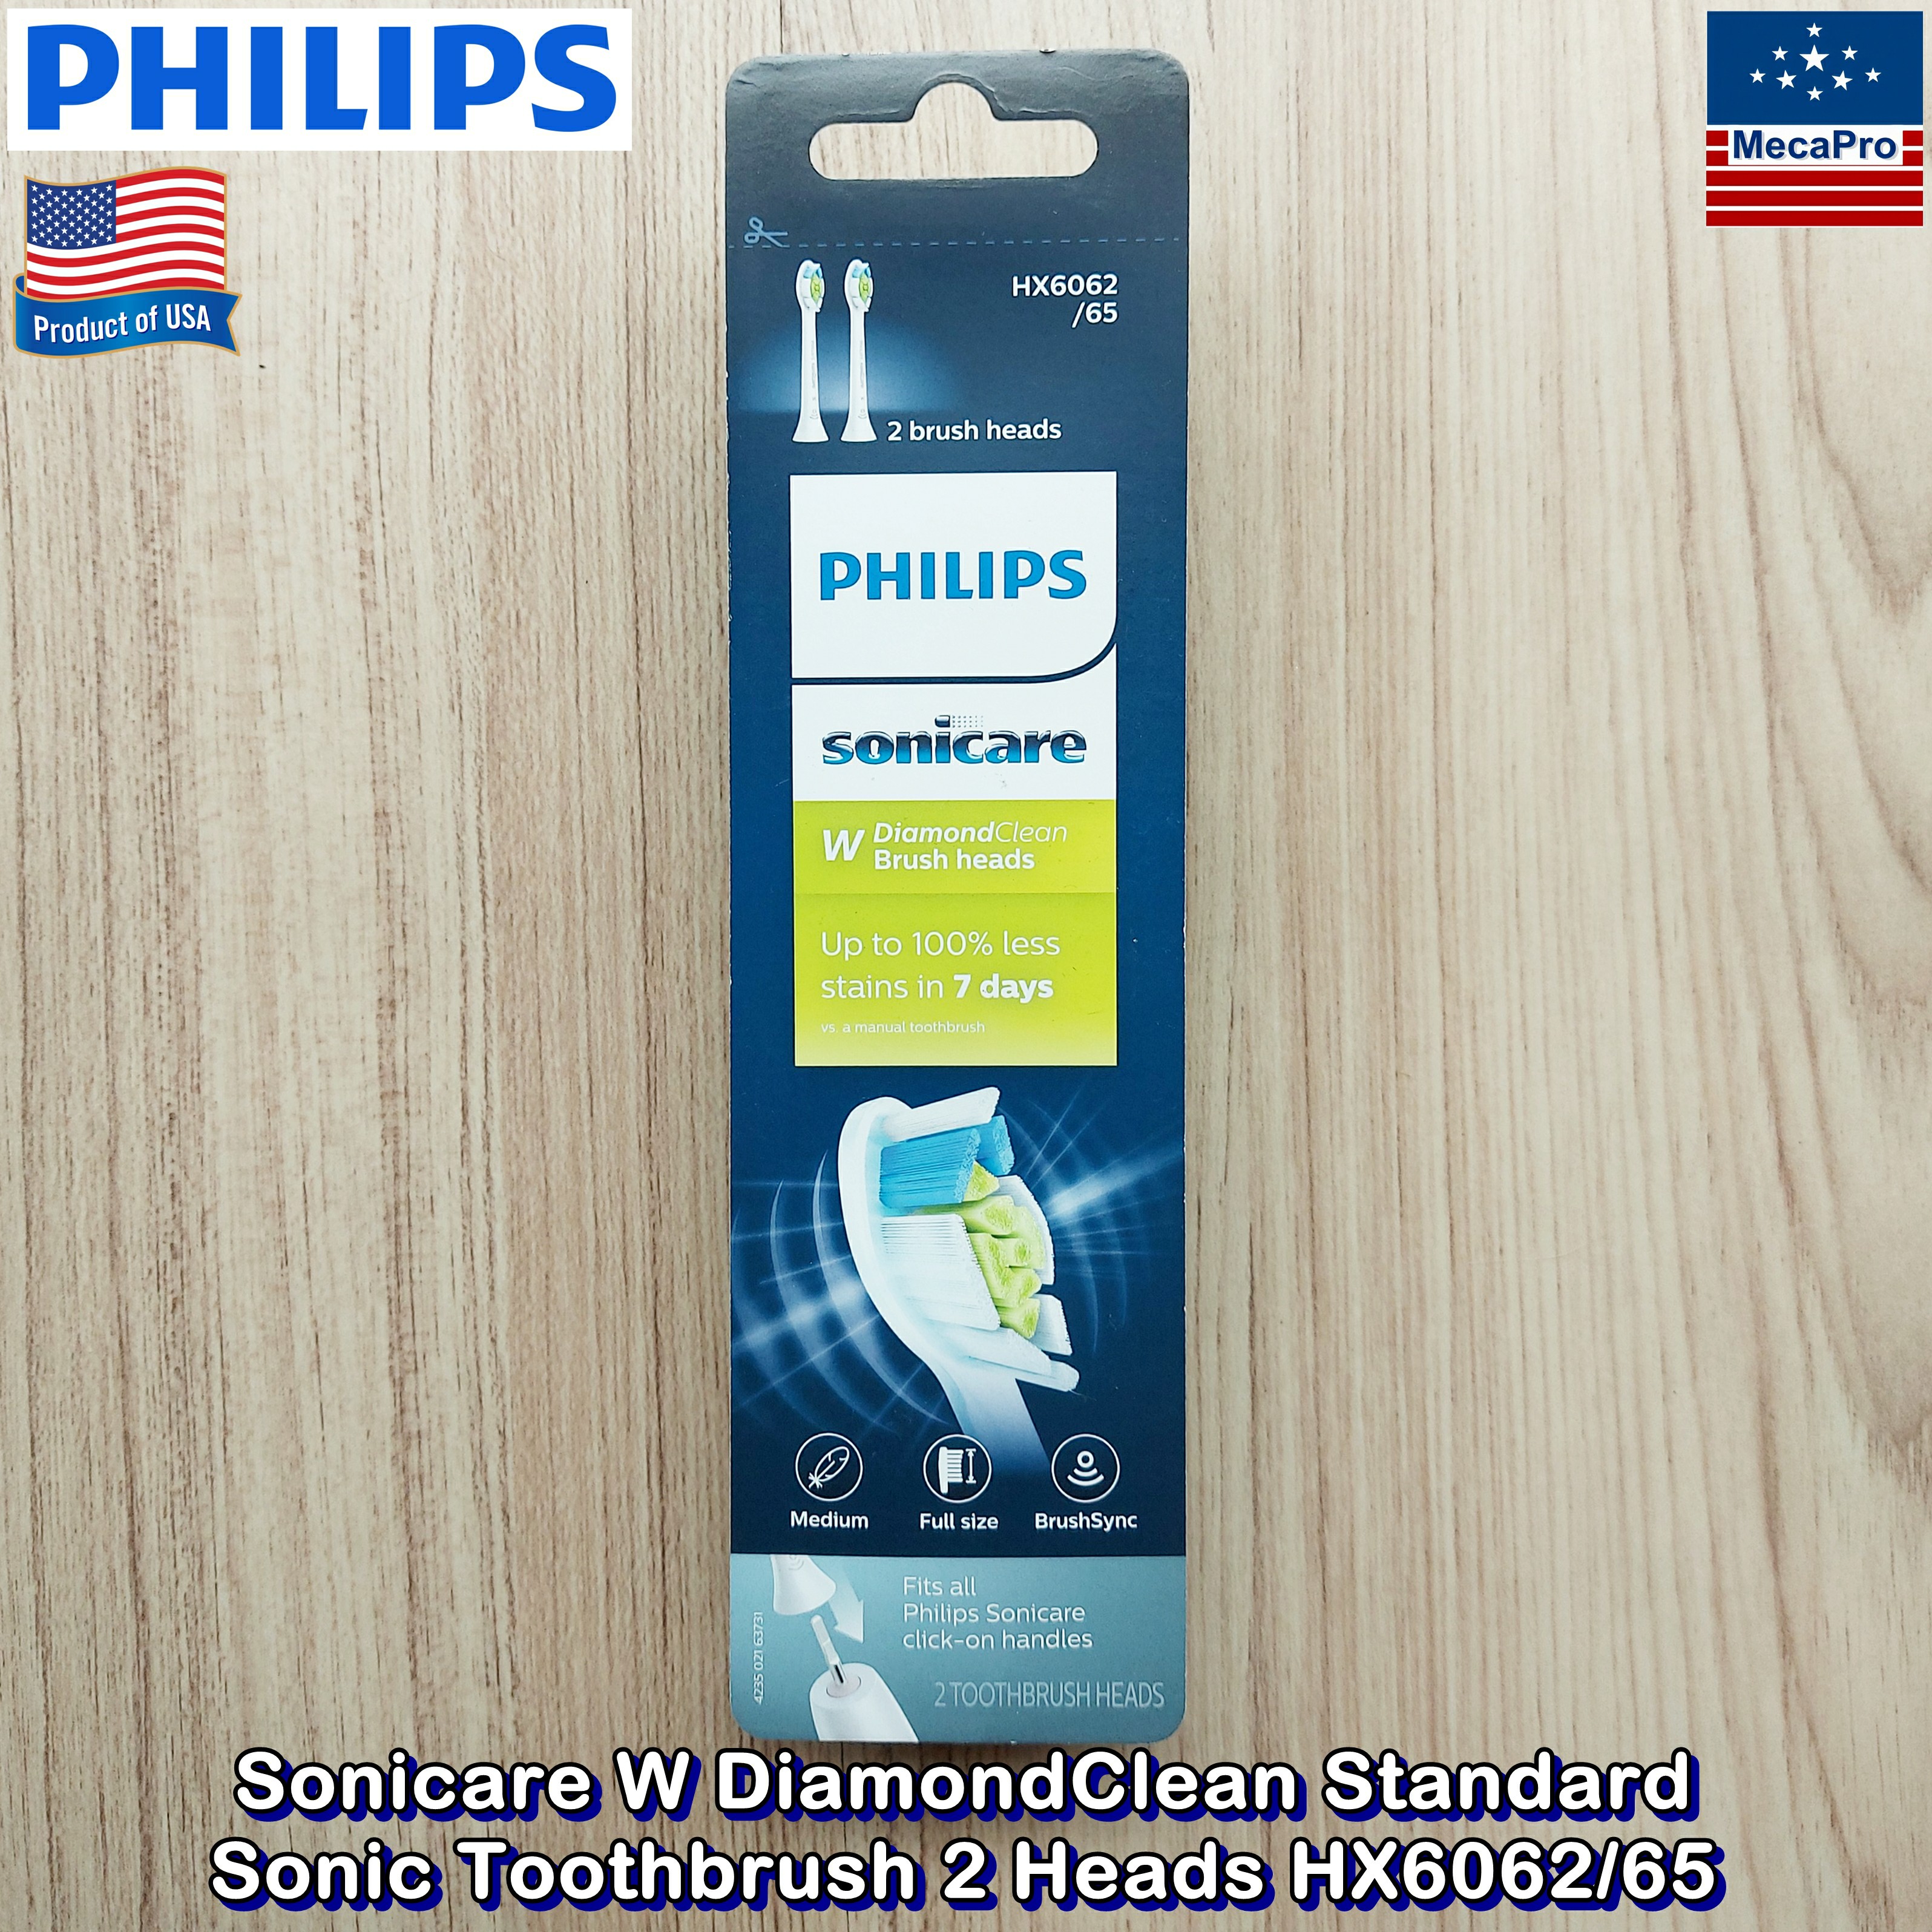 Philips® Sonicare W DiamondClean Standard Sonic Toothbrush 2 Heads HX6062/65 ฟิลิปส์ หัวแปรงสีฟันไฟฟ้า 2 ชิ้น/แพ็ค